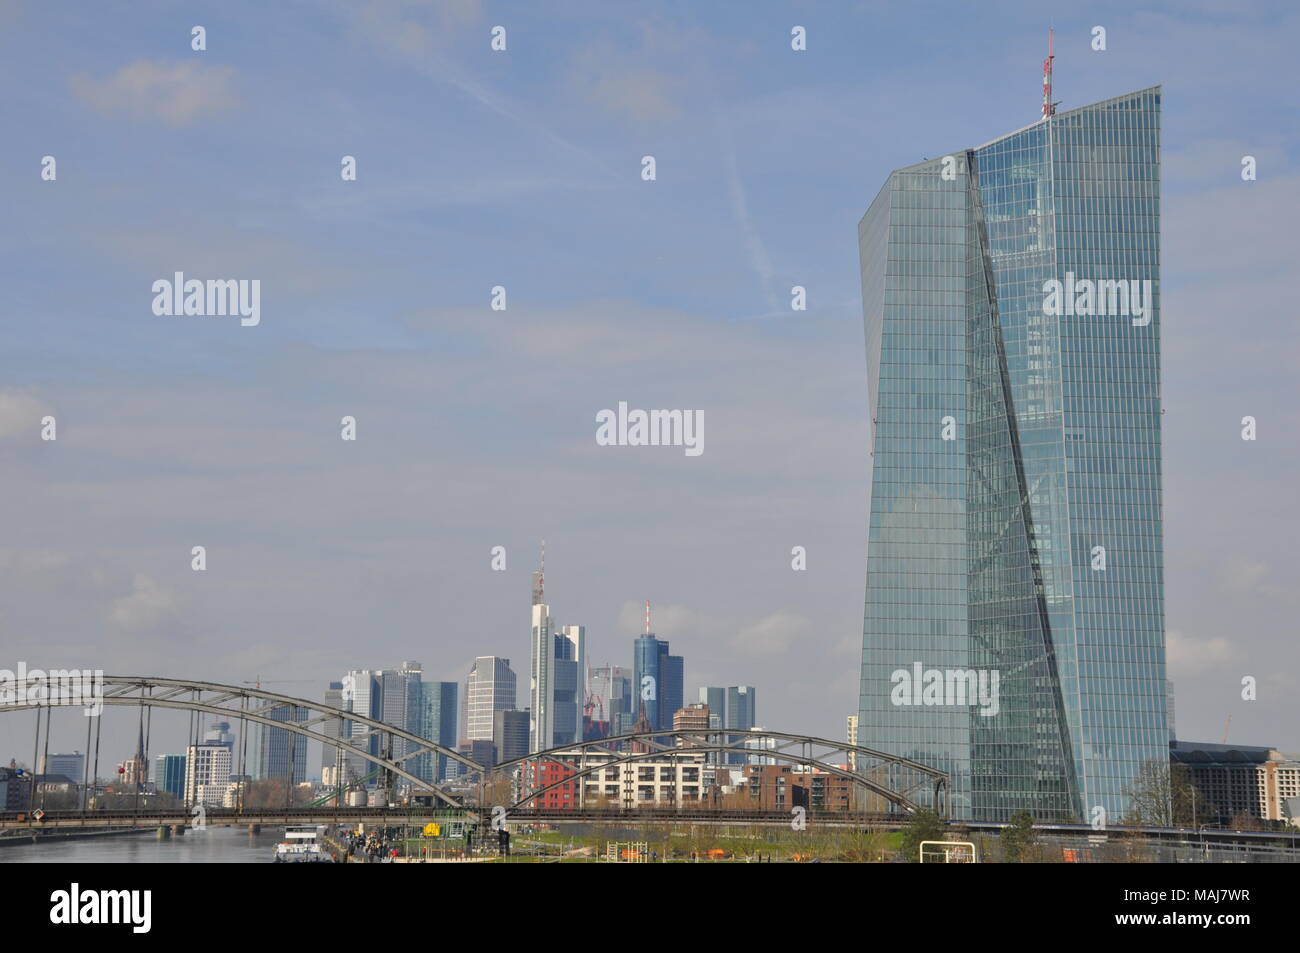 Skyline of Frankfurt with European central bank, Frankfurt am Main, Germany Stock Photo